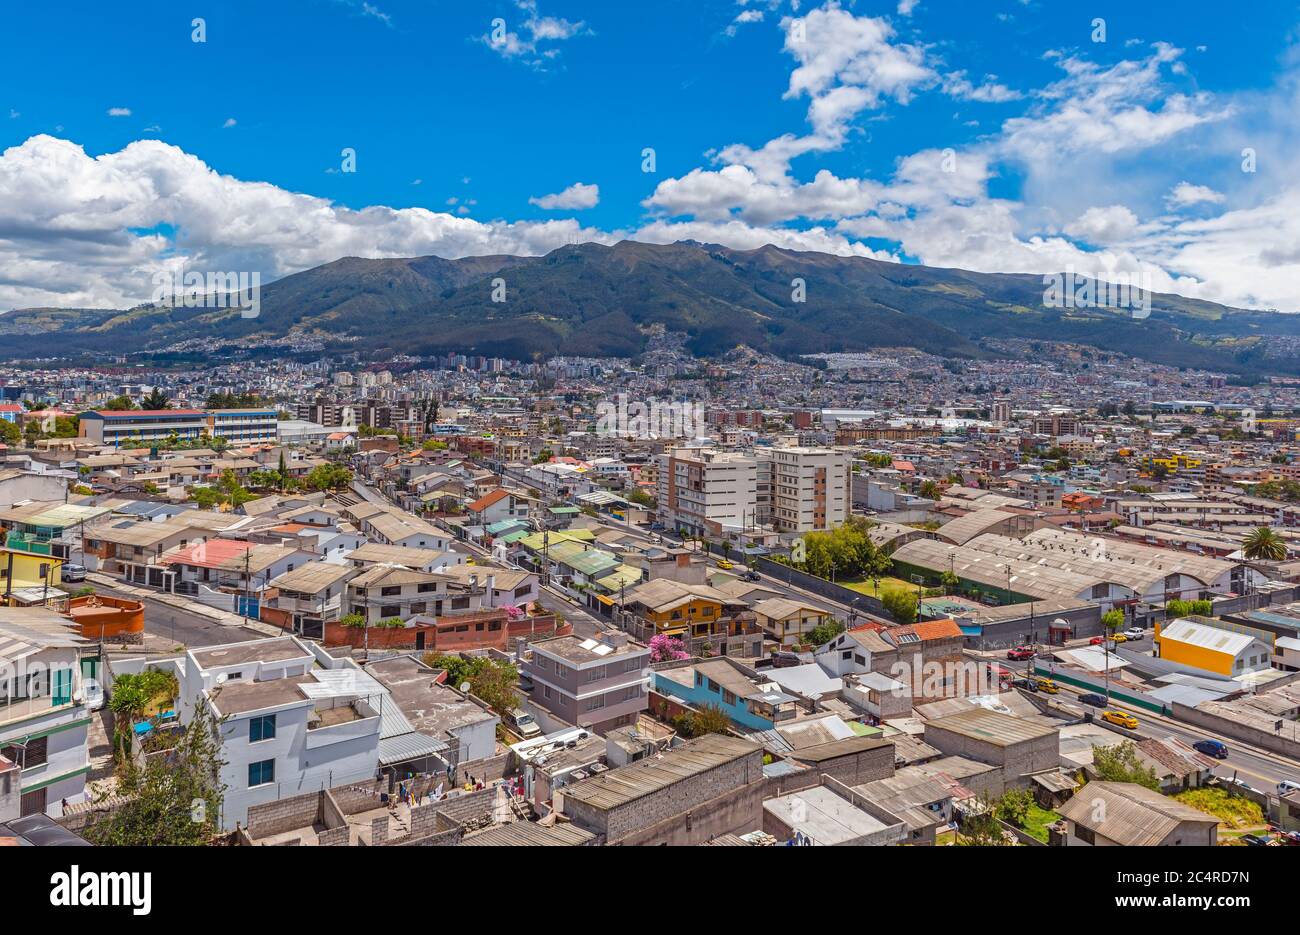 Luftbild der Stadt Quito mit dem Vulkan Pichincha, Ecuador. Stockfoto